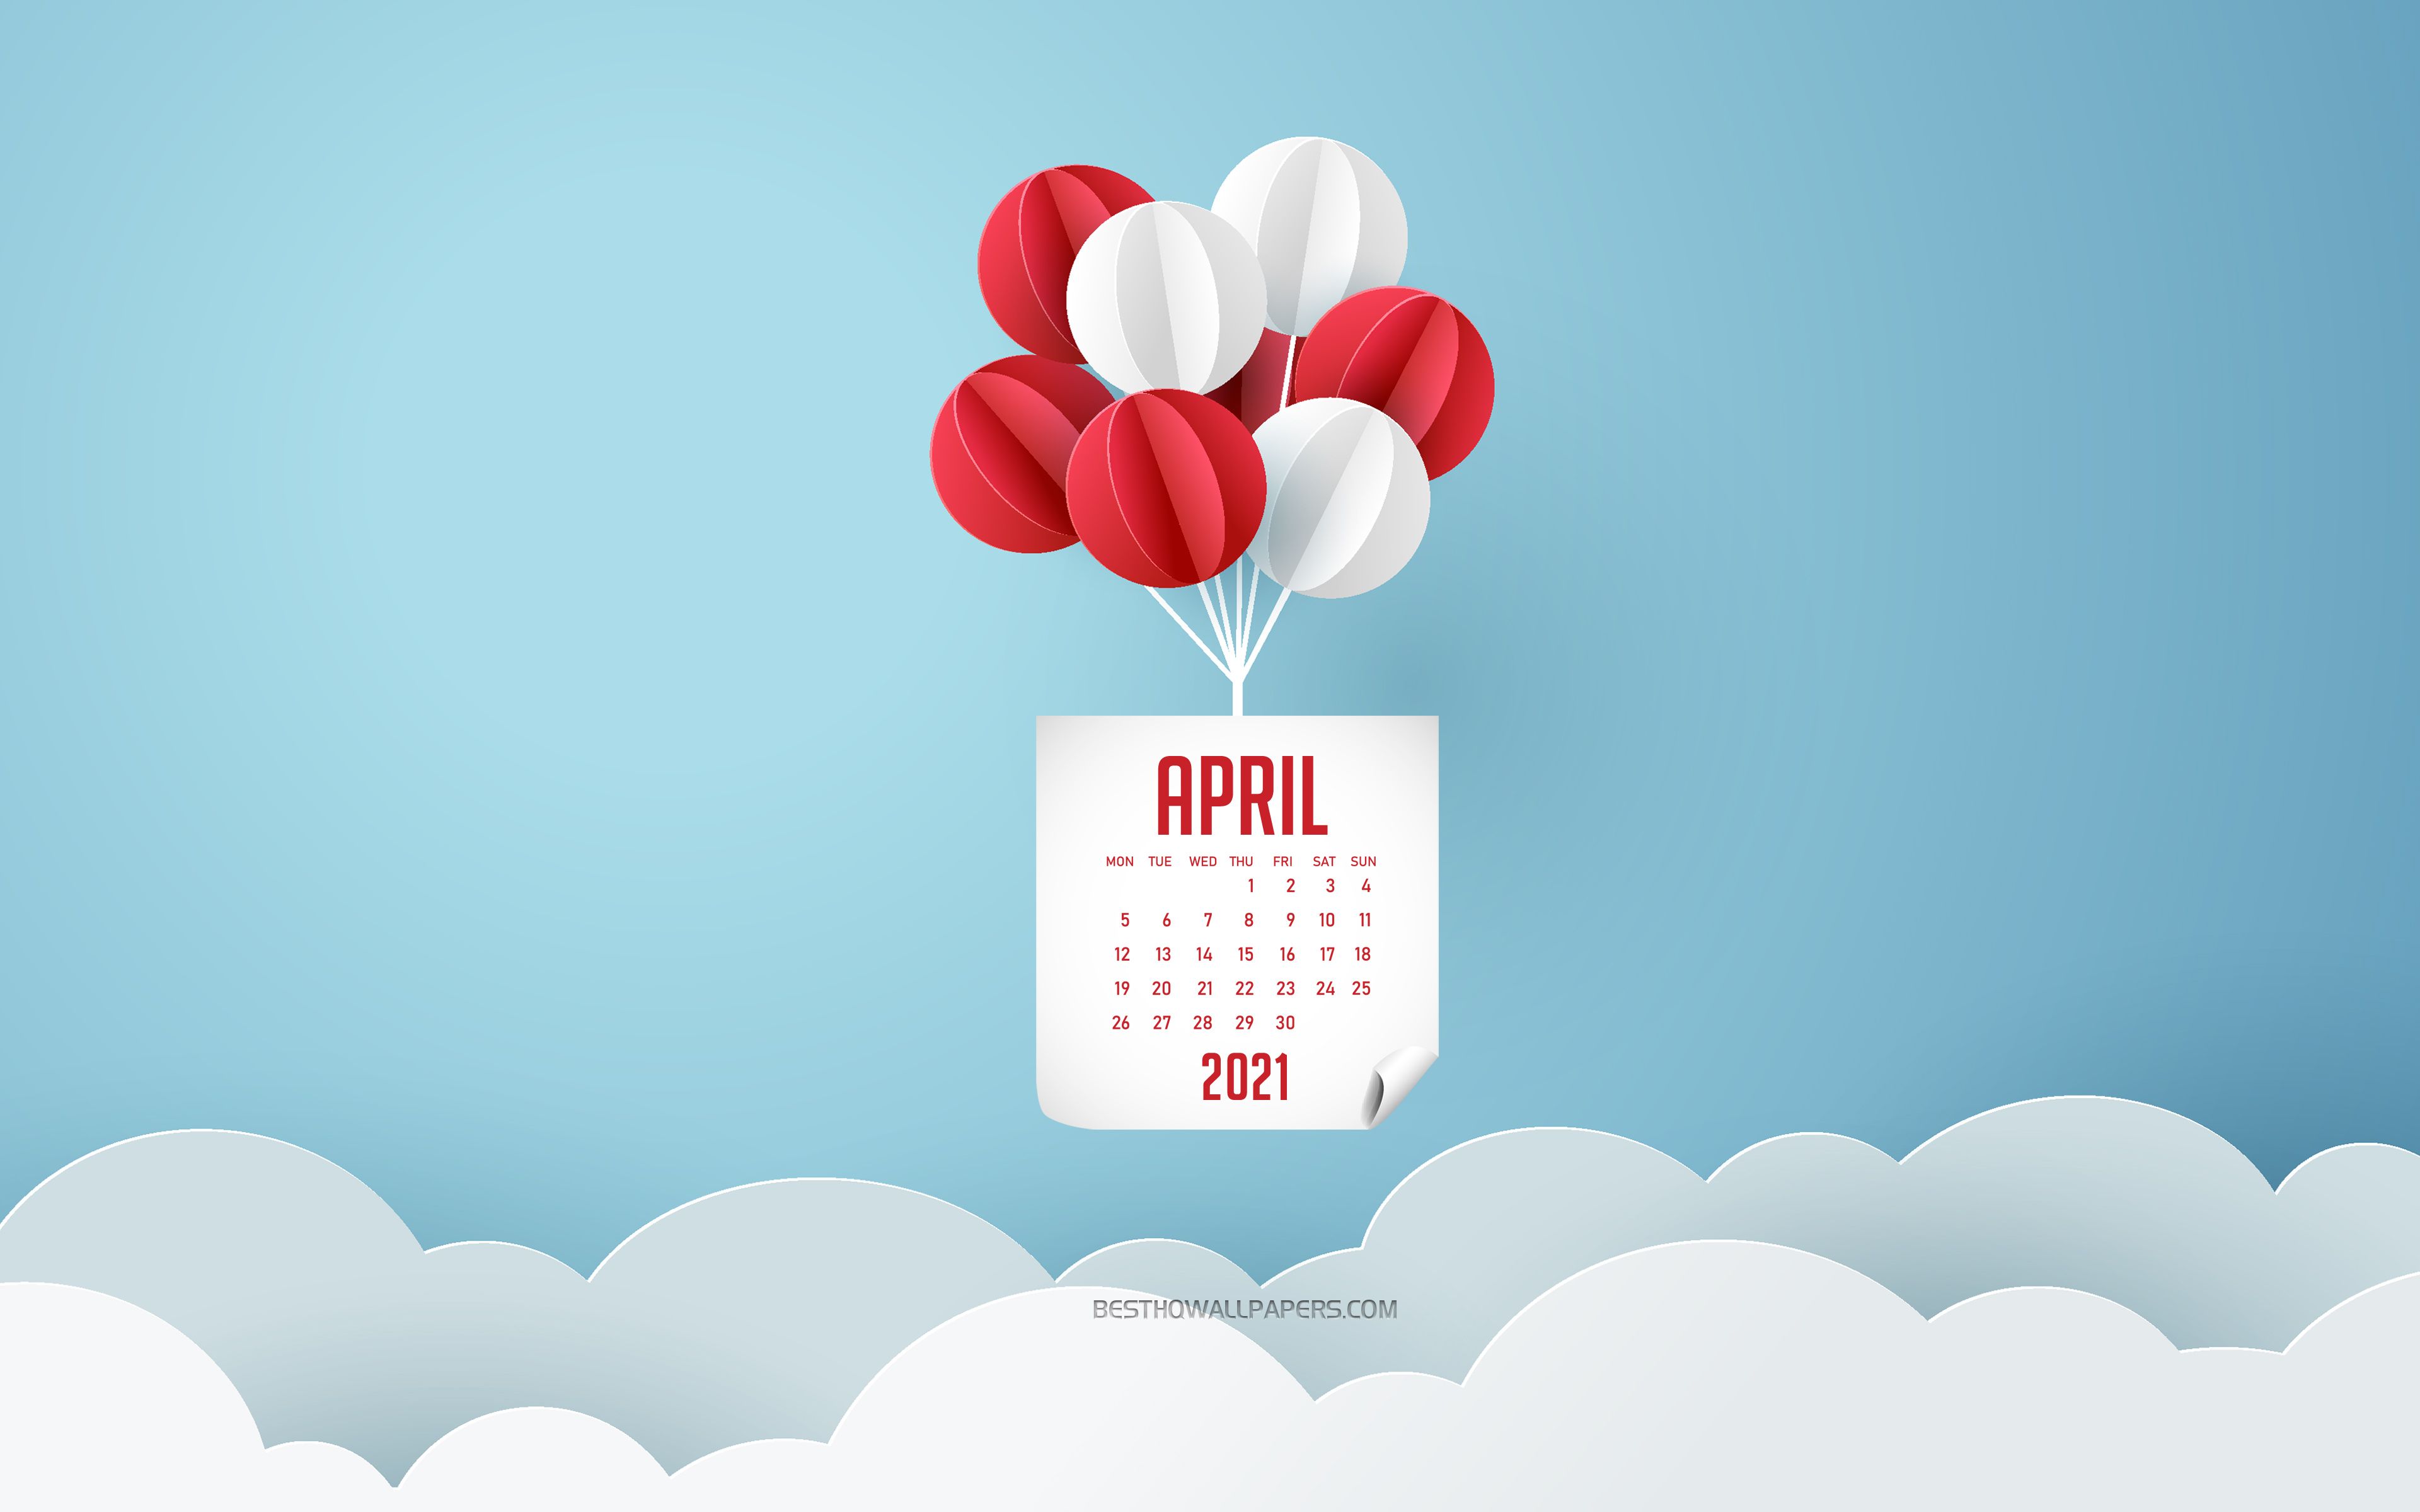 April 2021 Calendar Wallpapers   Top Free April 2021 Calendar